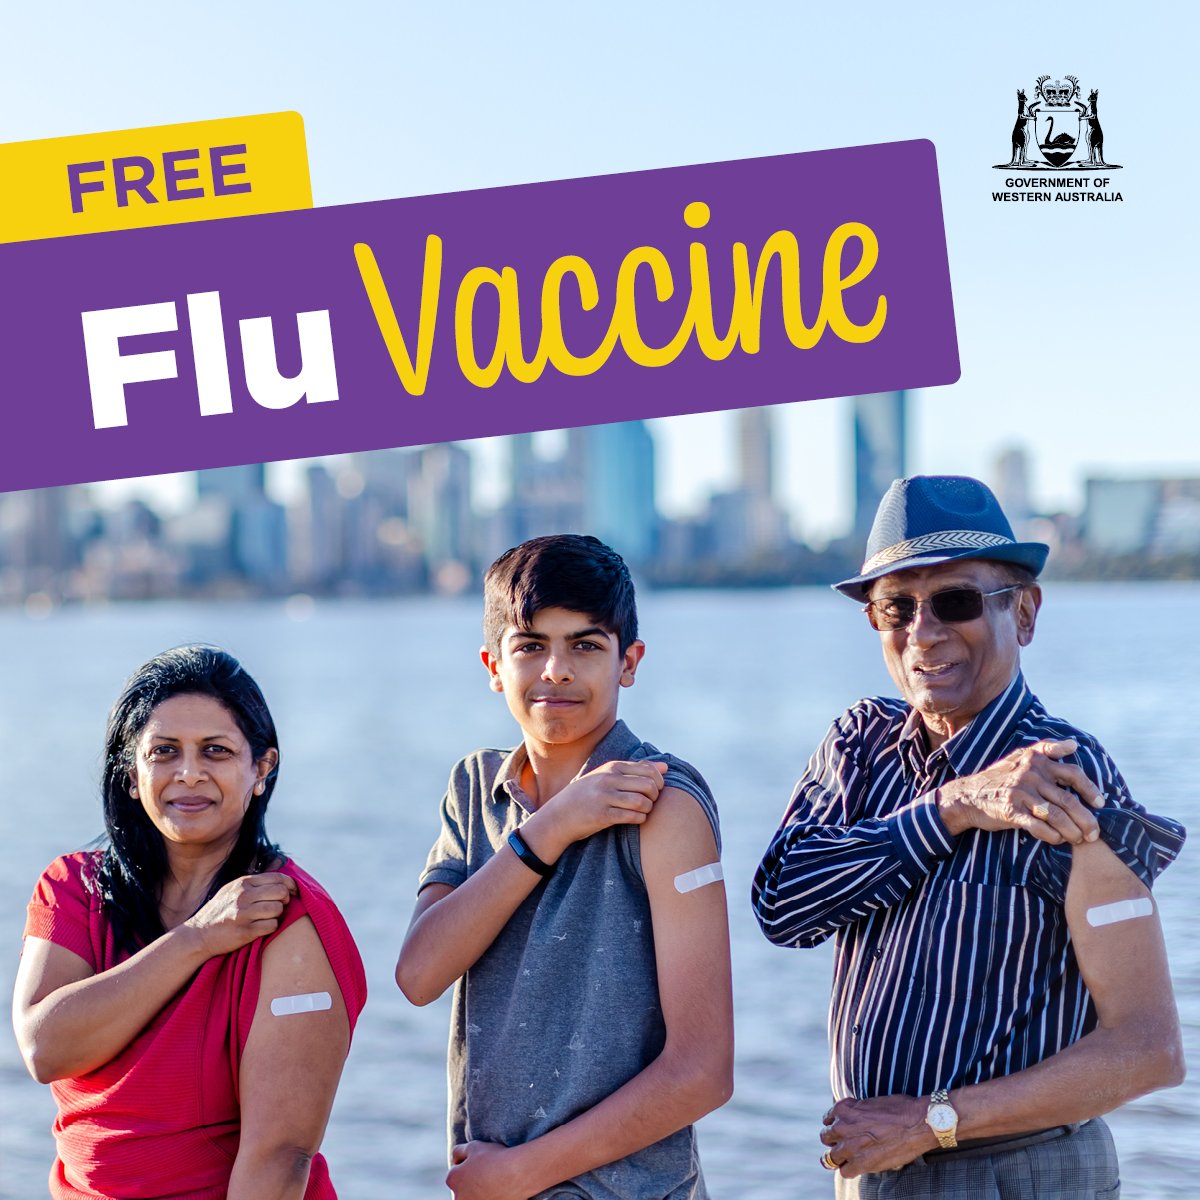 free flu vaccines